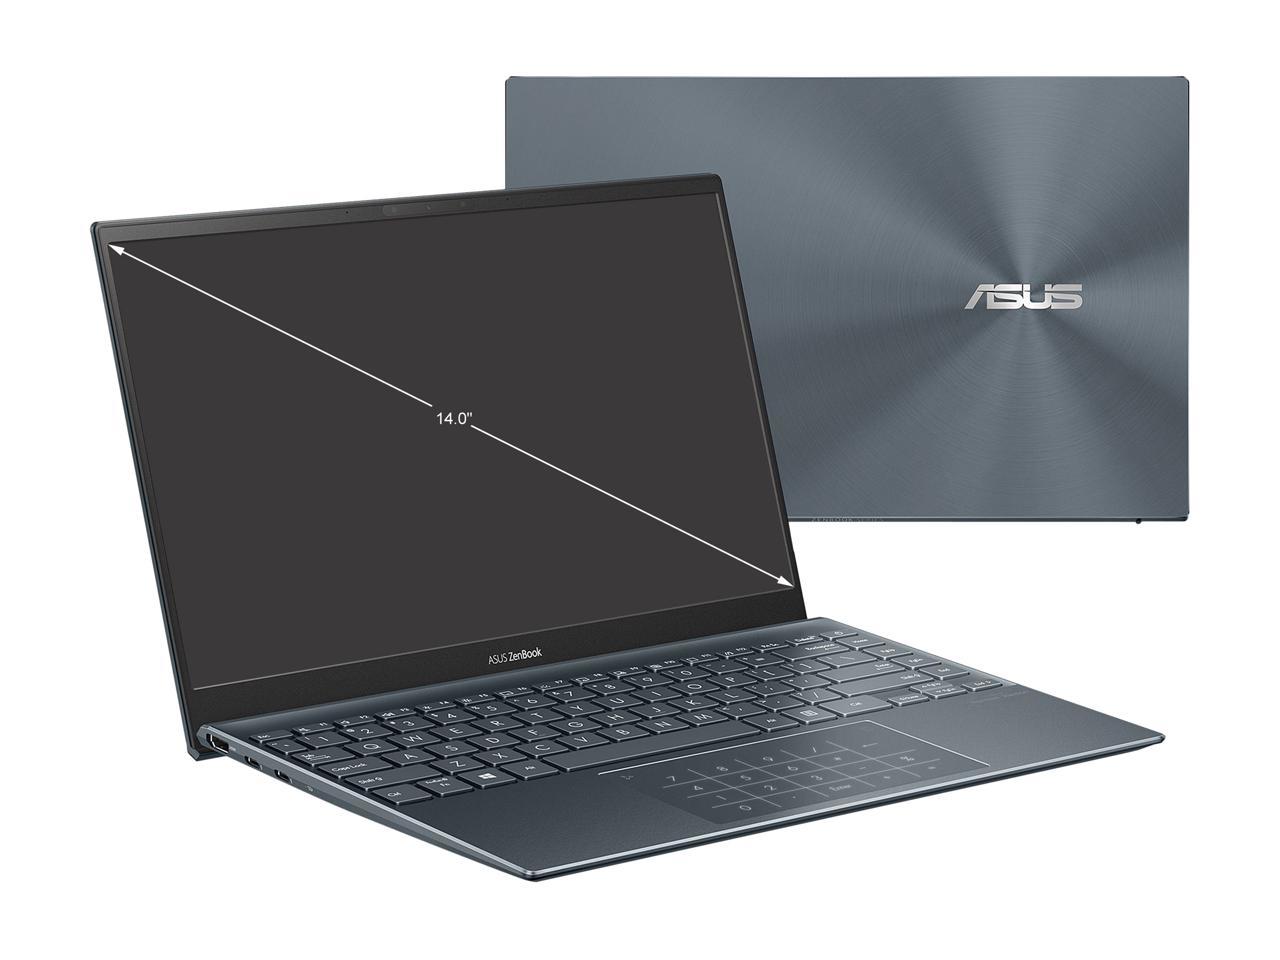 Asus Zenbook 14 Ultra Slim Laptop 14 Full Hd Nanoedge Display Intel Core I5 1135g7 8gb Ram 9650